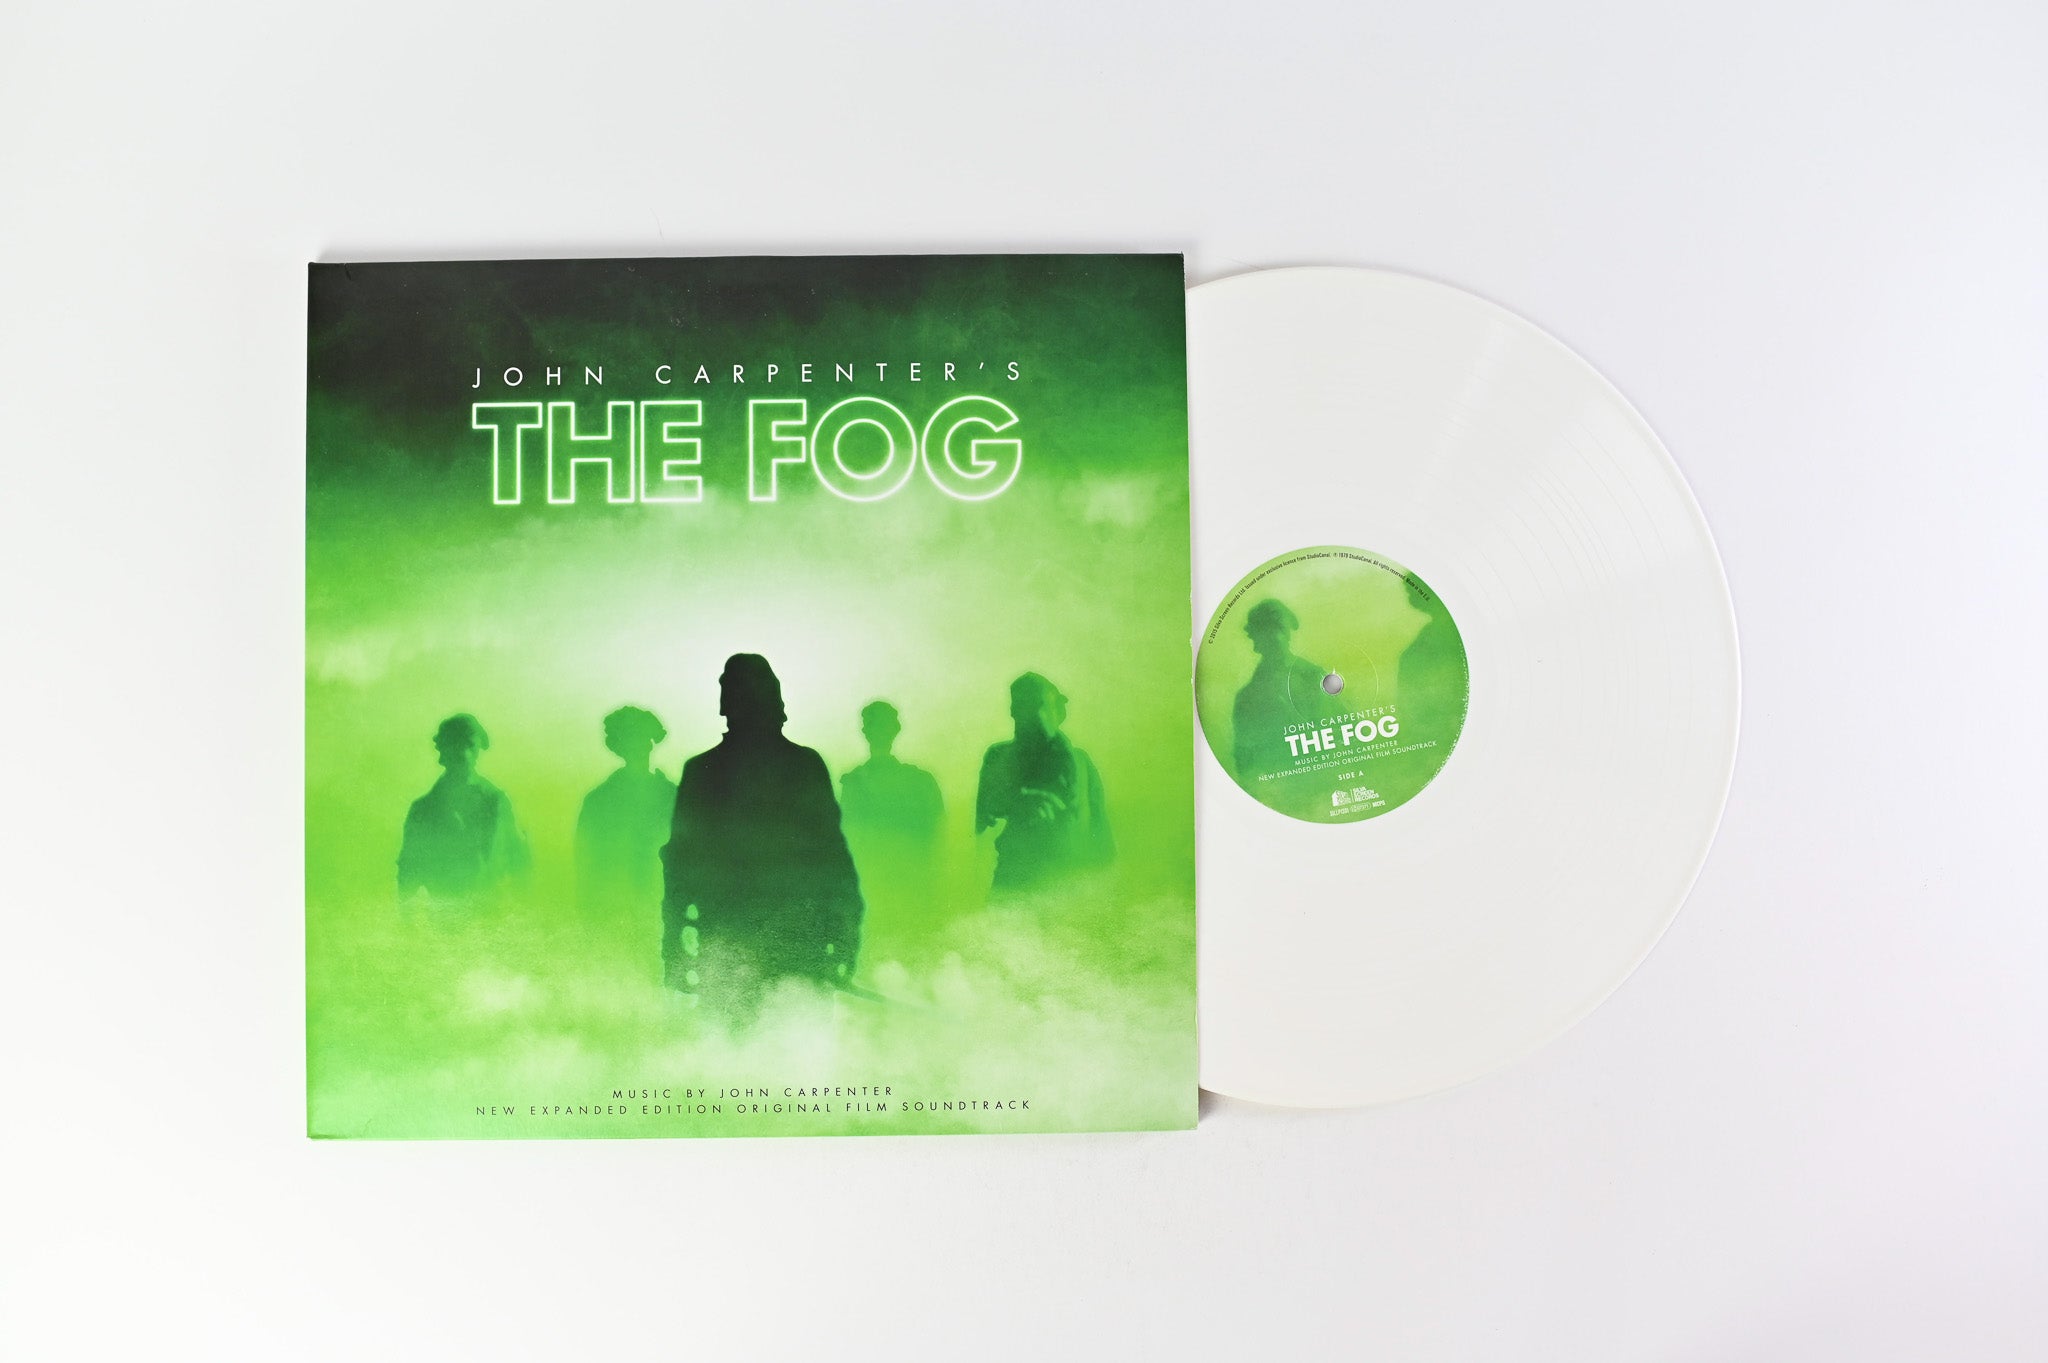 John Carpenter - The Fog (New Expanded Edition Original Film Soundtrack) on Silva Screen Green and White Vinyl